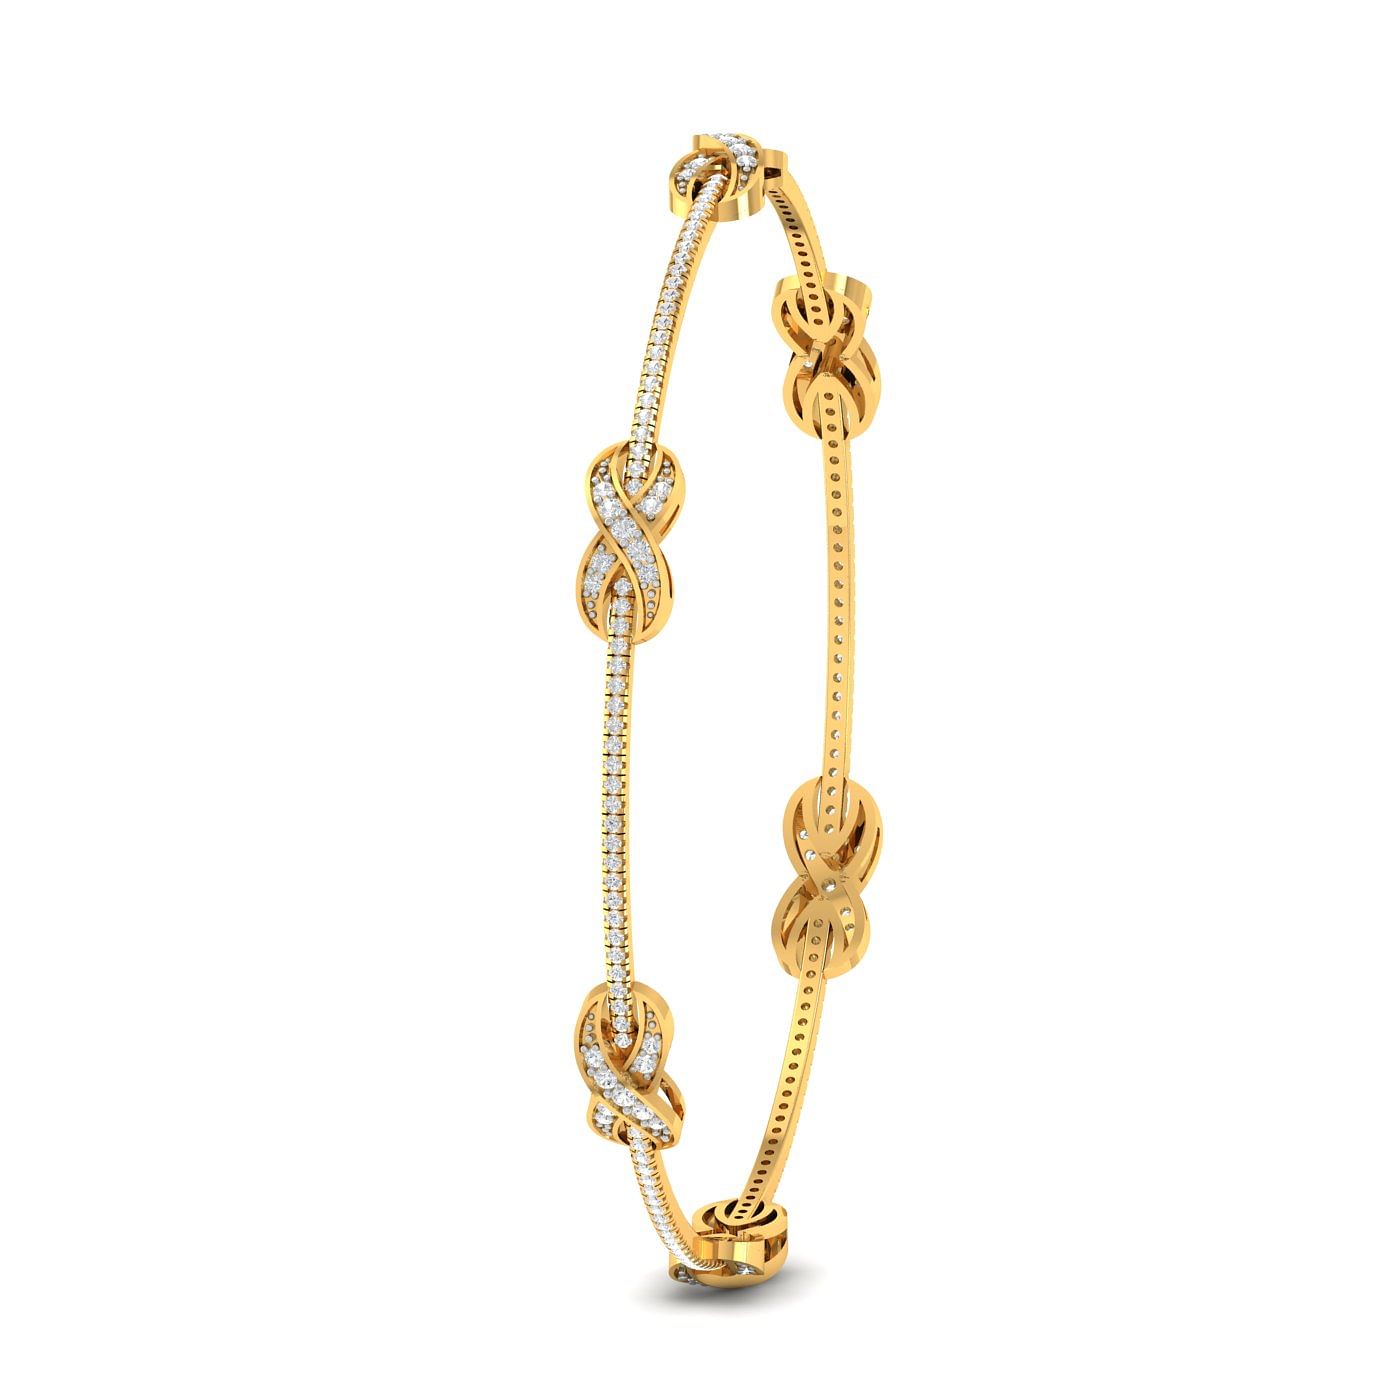 Designer Chaitrika Diamond Bangles With Yellow Gold